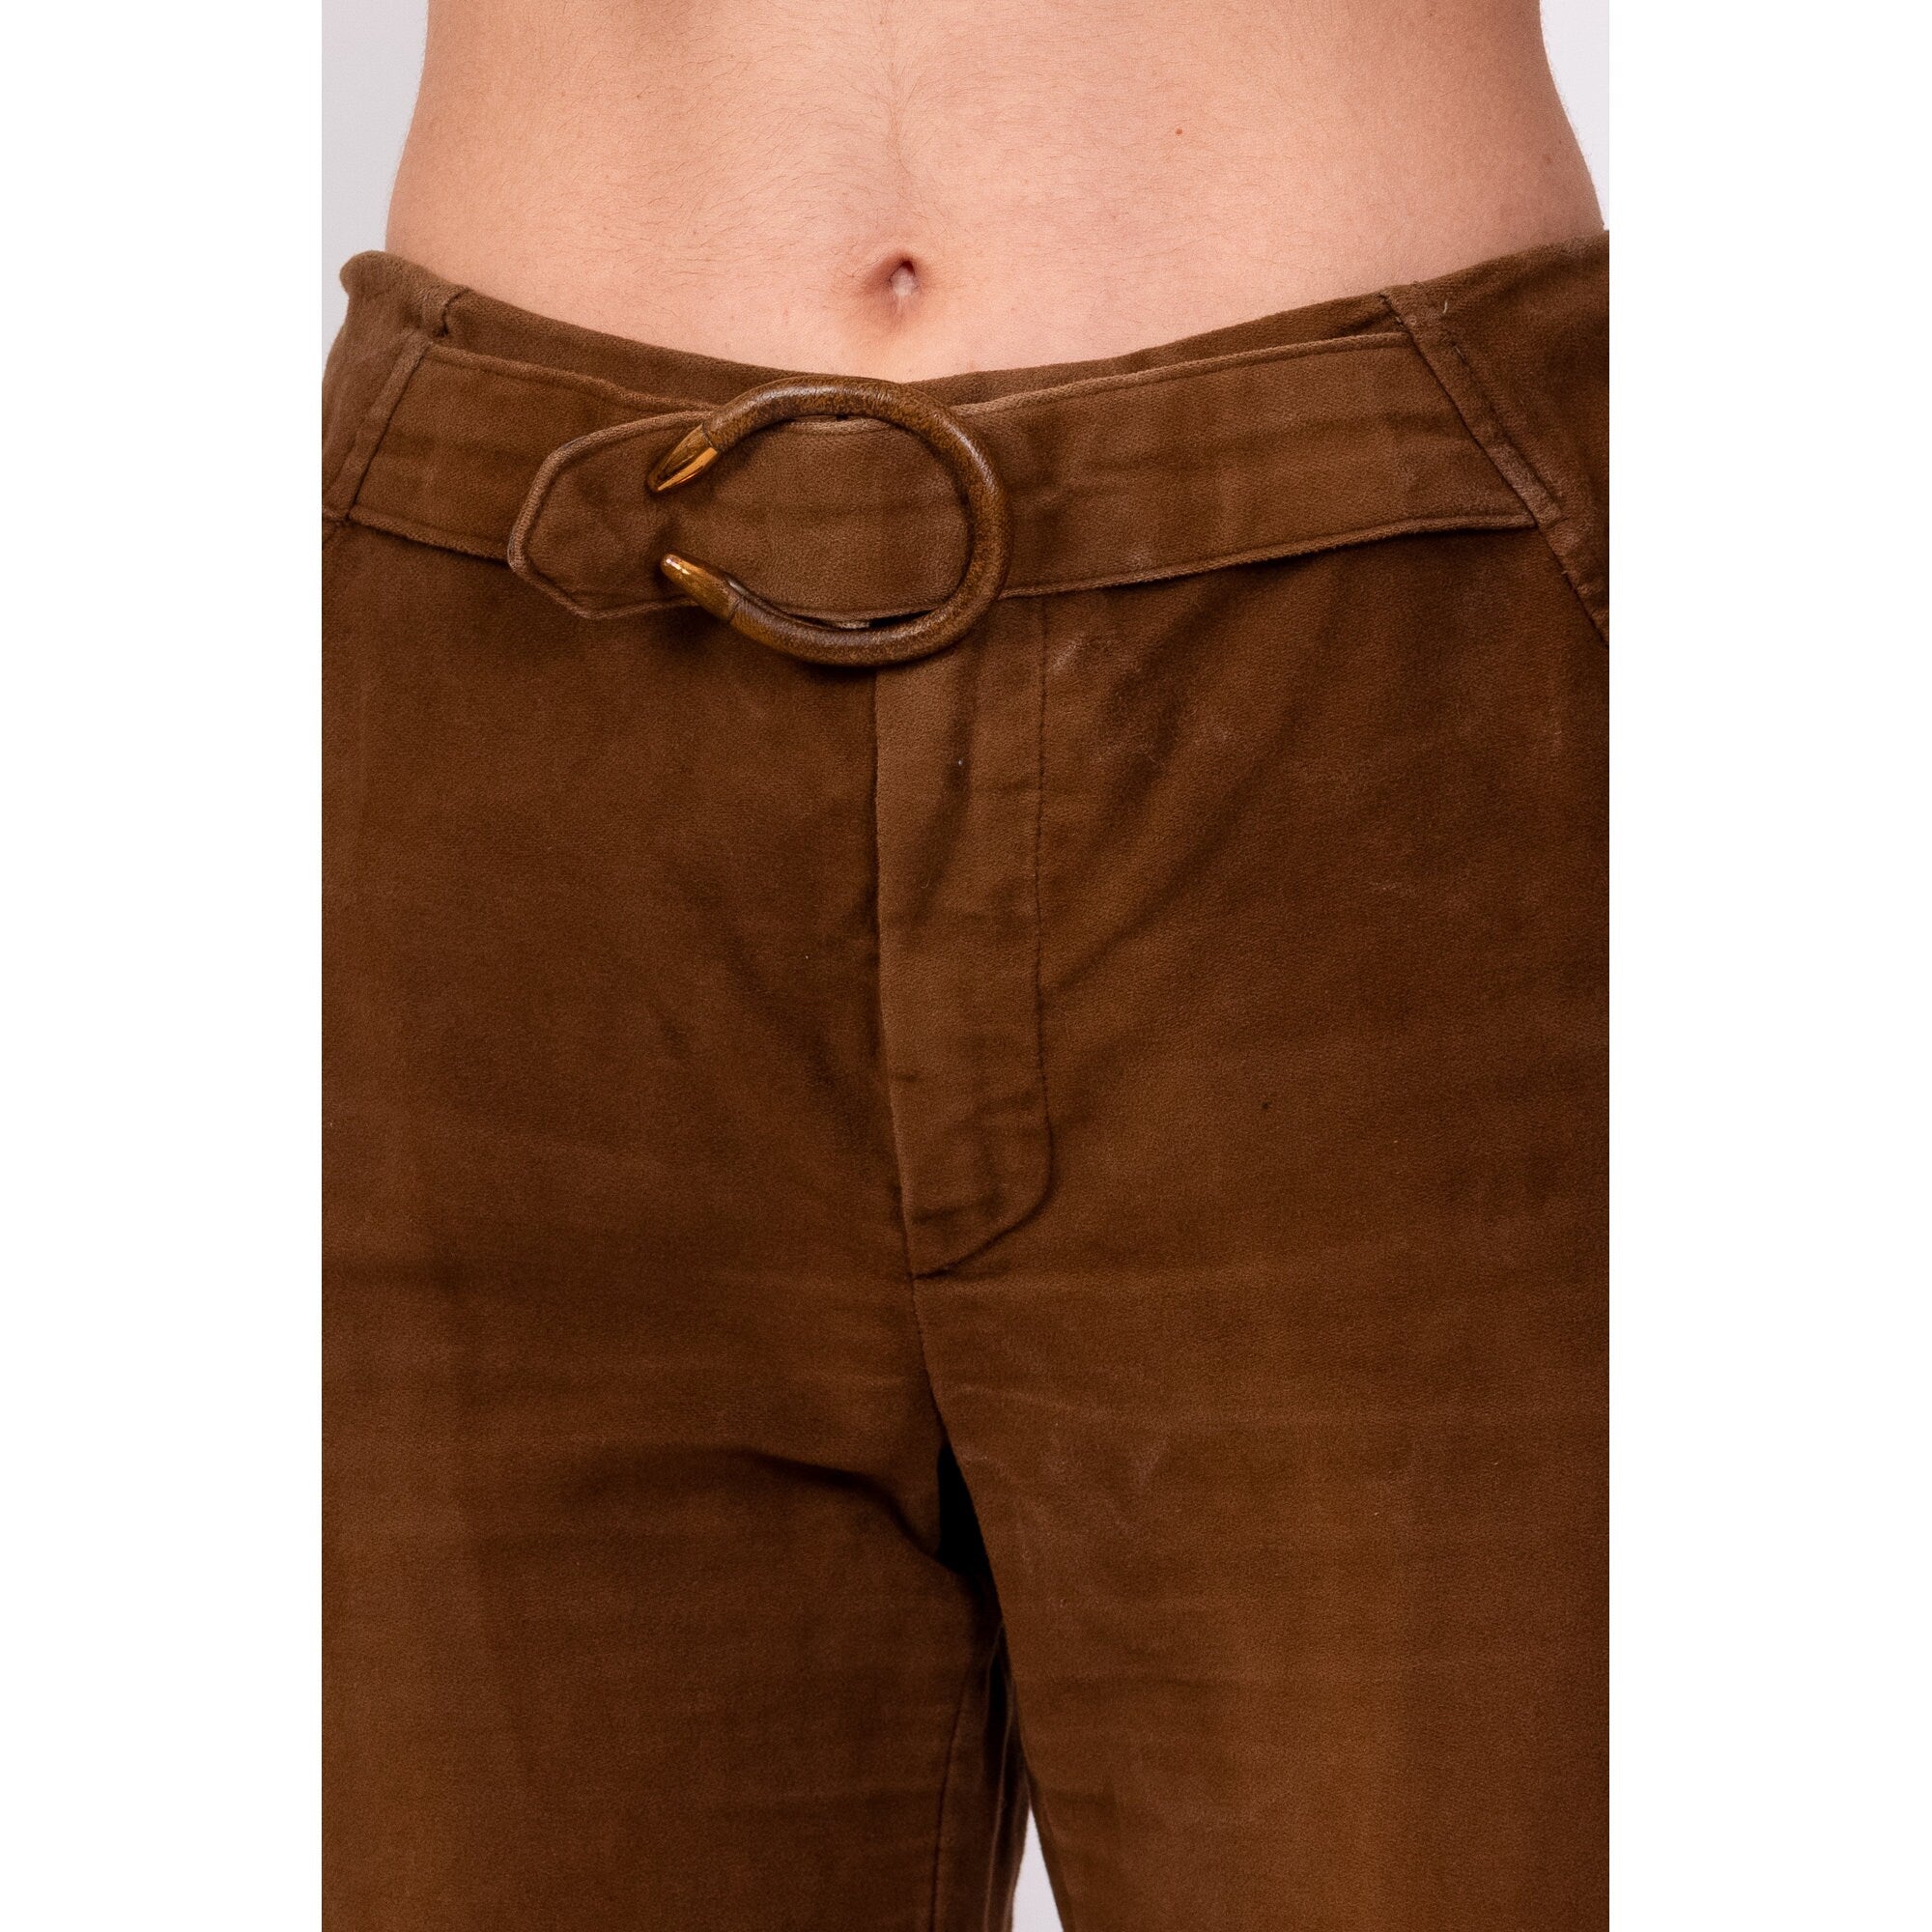 Apendorf Womens Linen Pants Casual Summer Pants Boho India | Ubuy